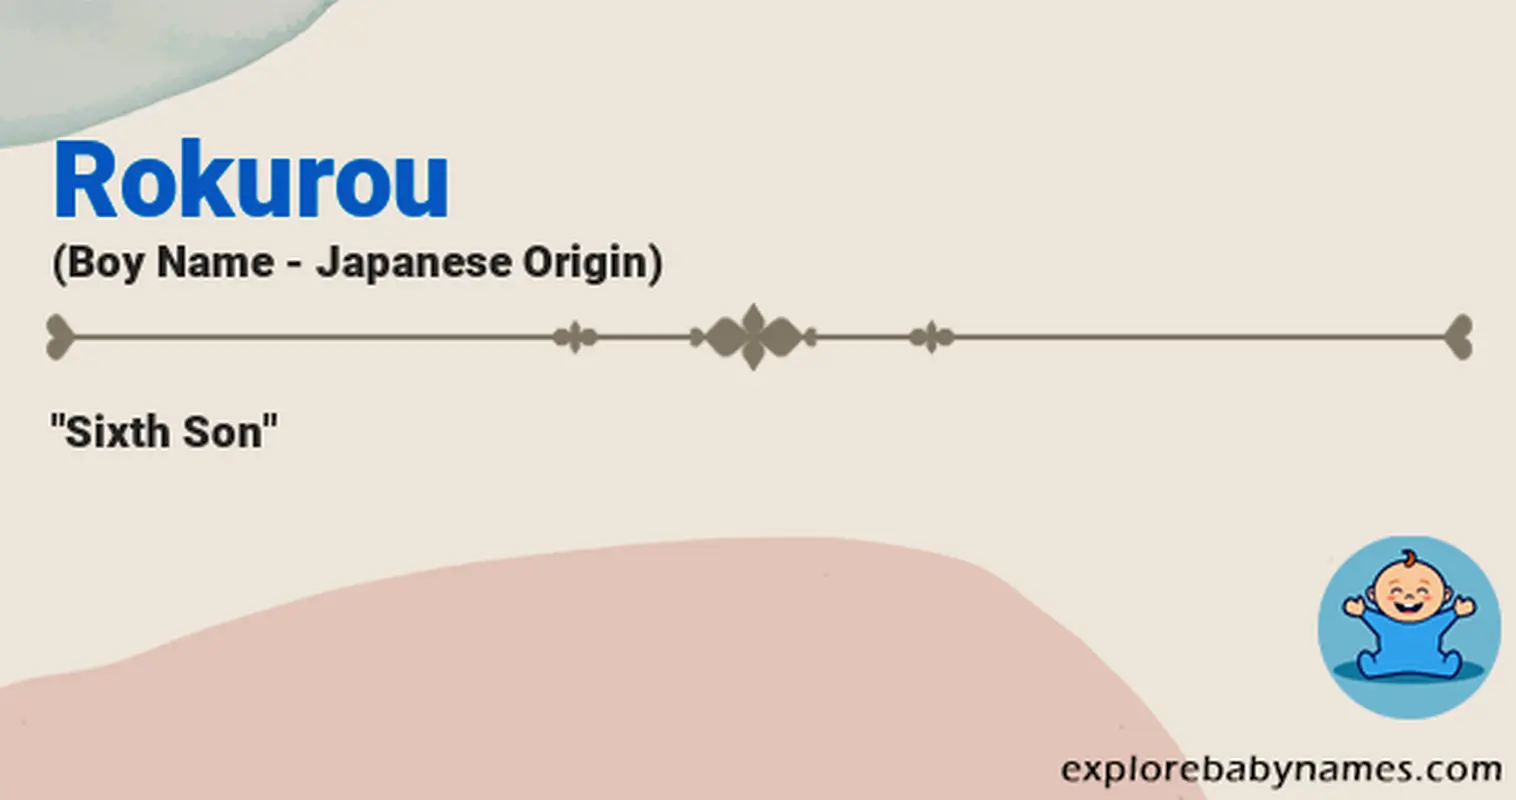 Meaning of Rokurou